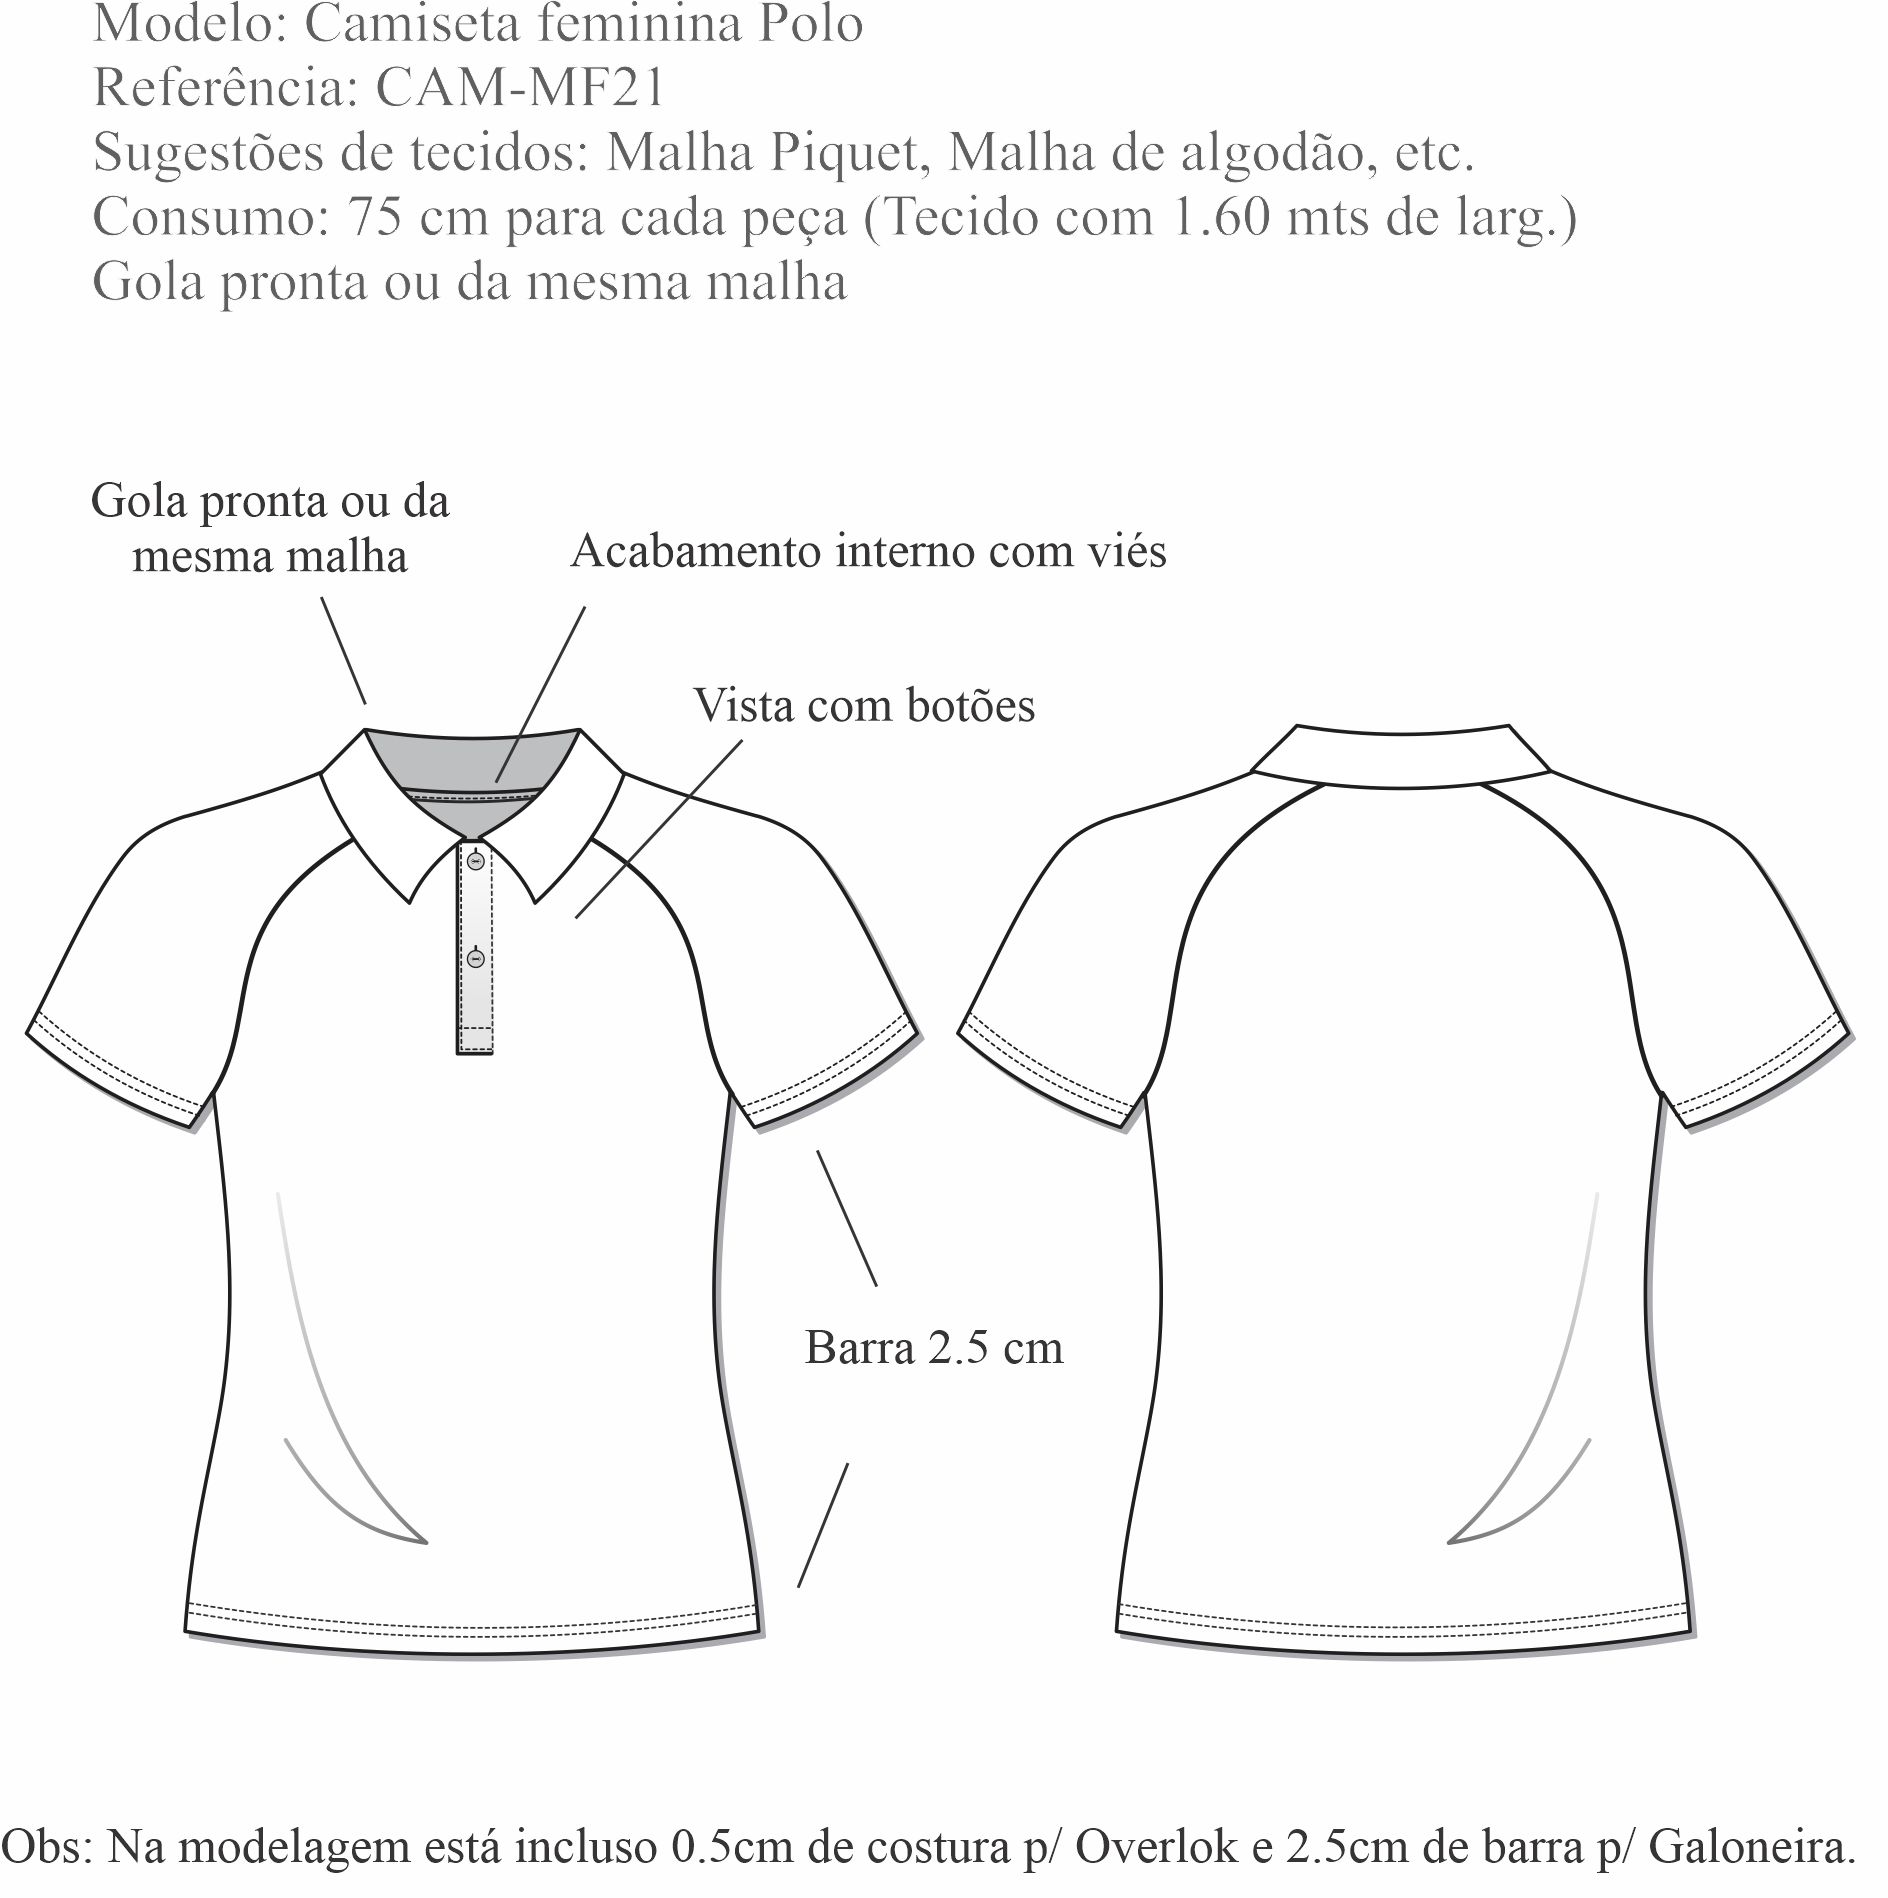 Camiseta Feminina Polo (CAM-MF21) - Foto 1